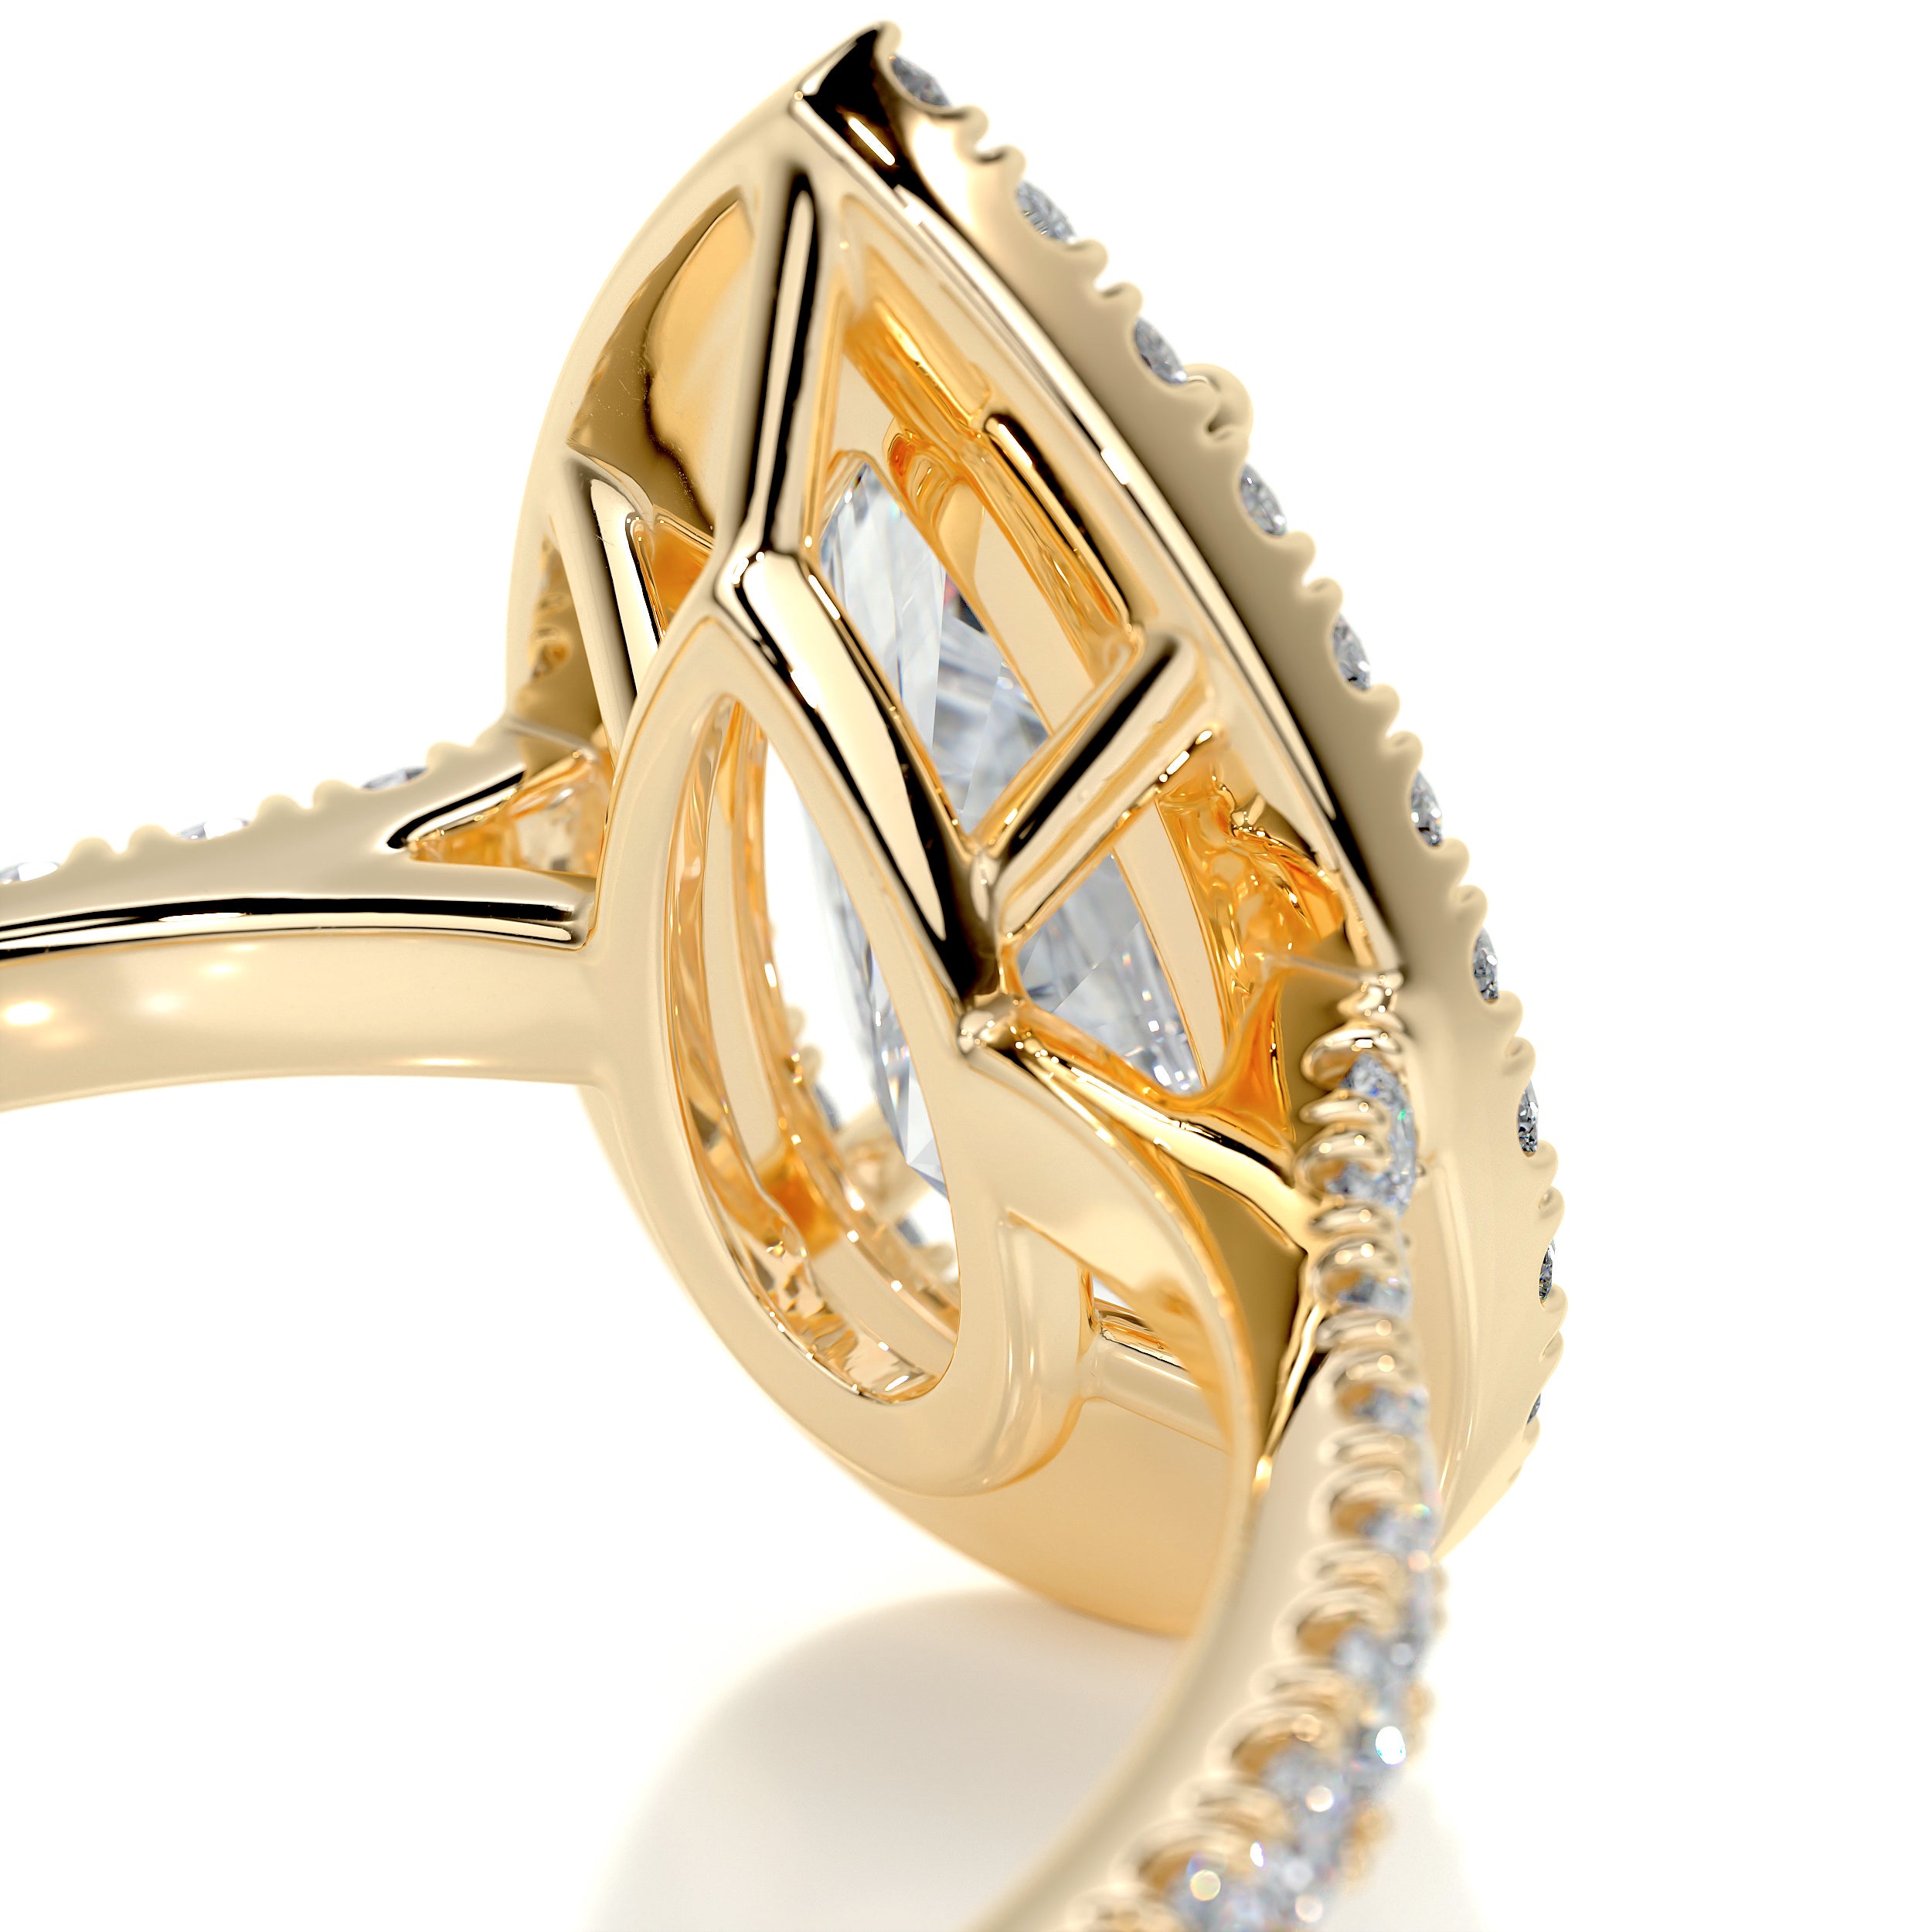 Sophia Diamond Engagement Ring   (2 Carat) -18K Yellow Gold